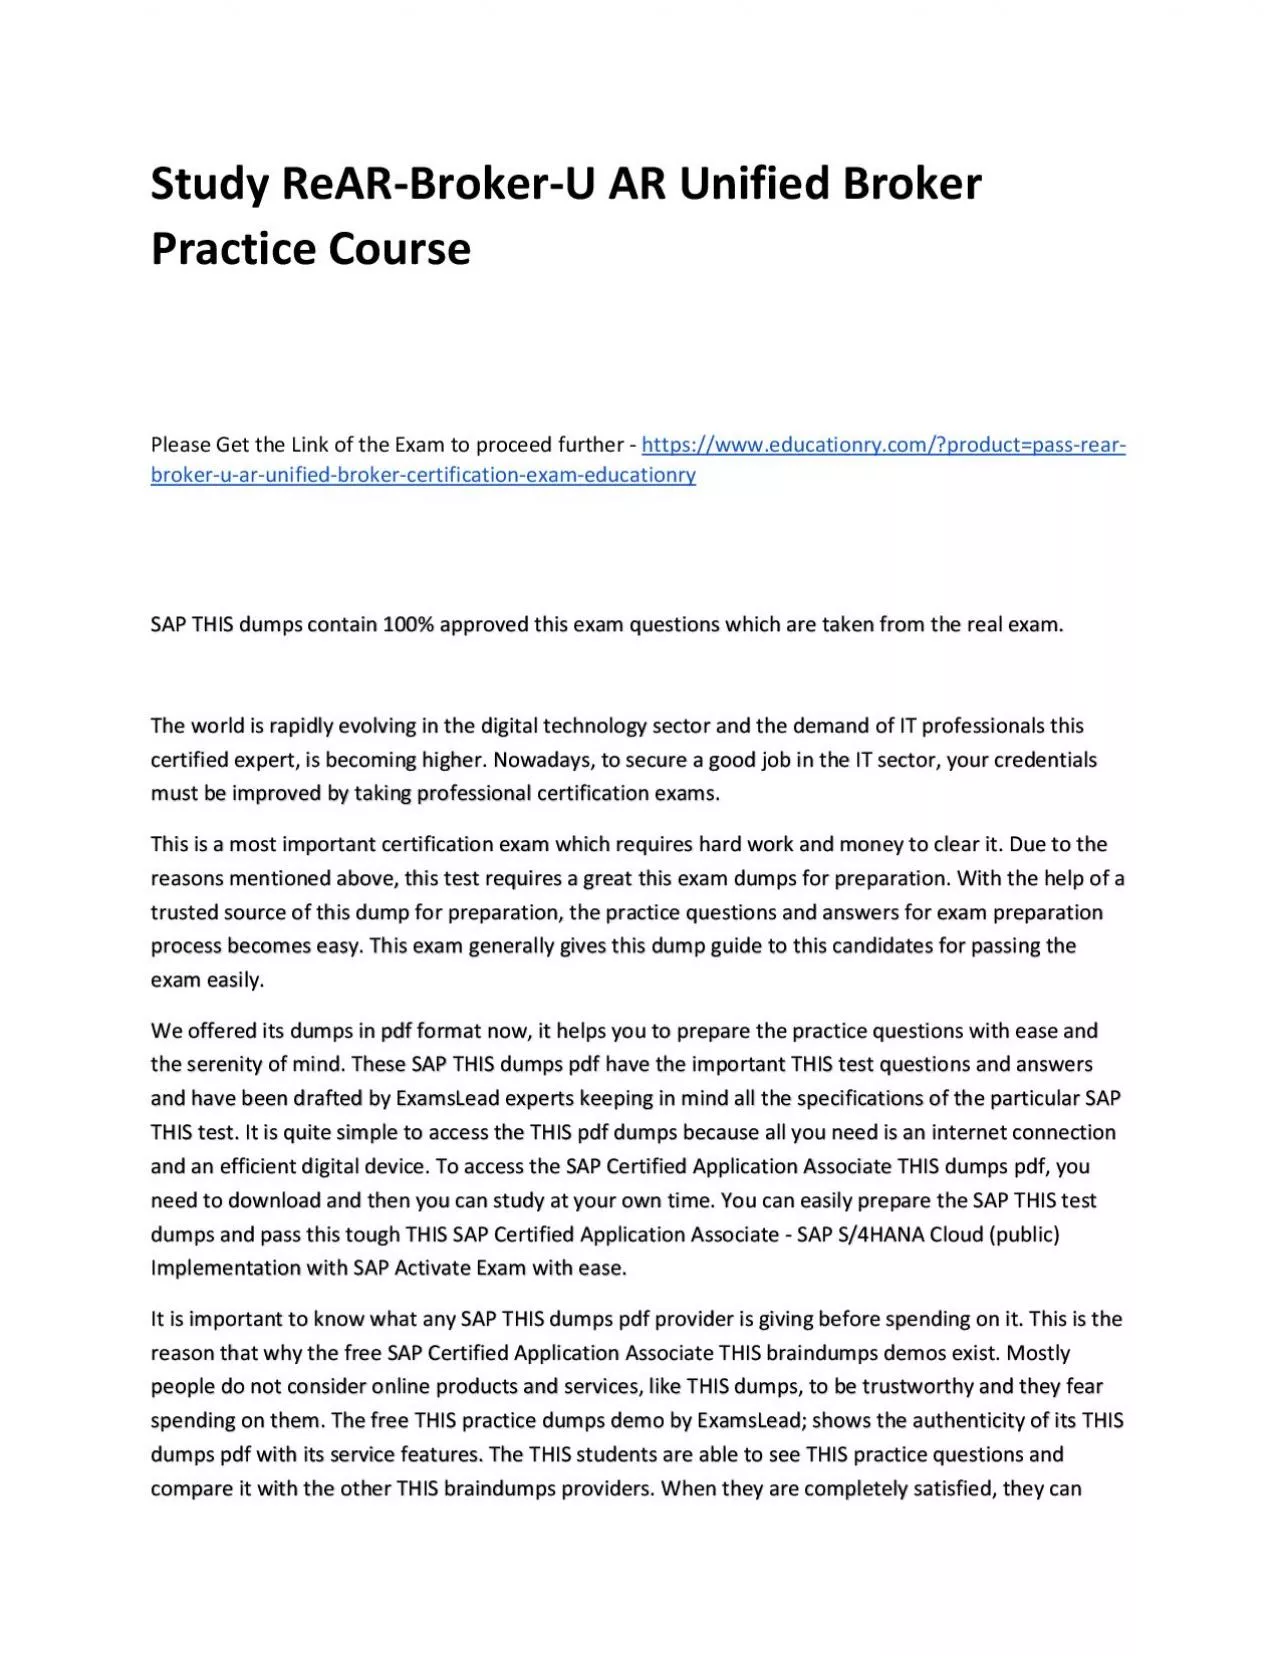 Study ReAR-Broker-U AR Unified Broker Practice Course